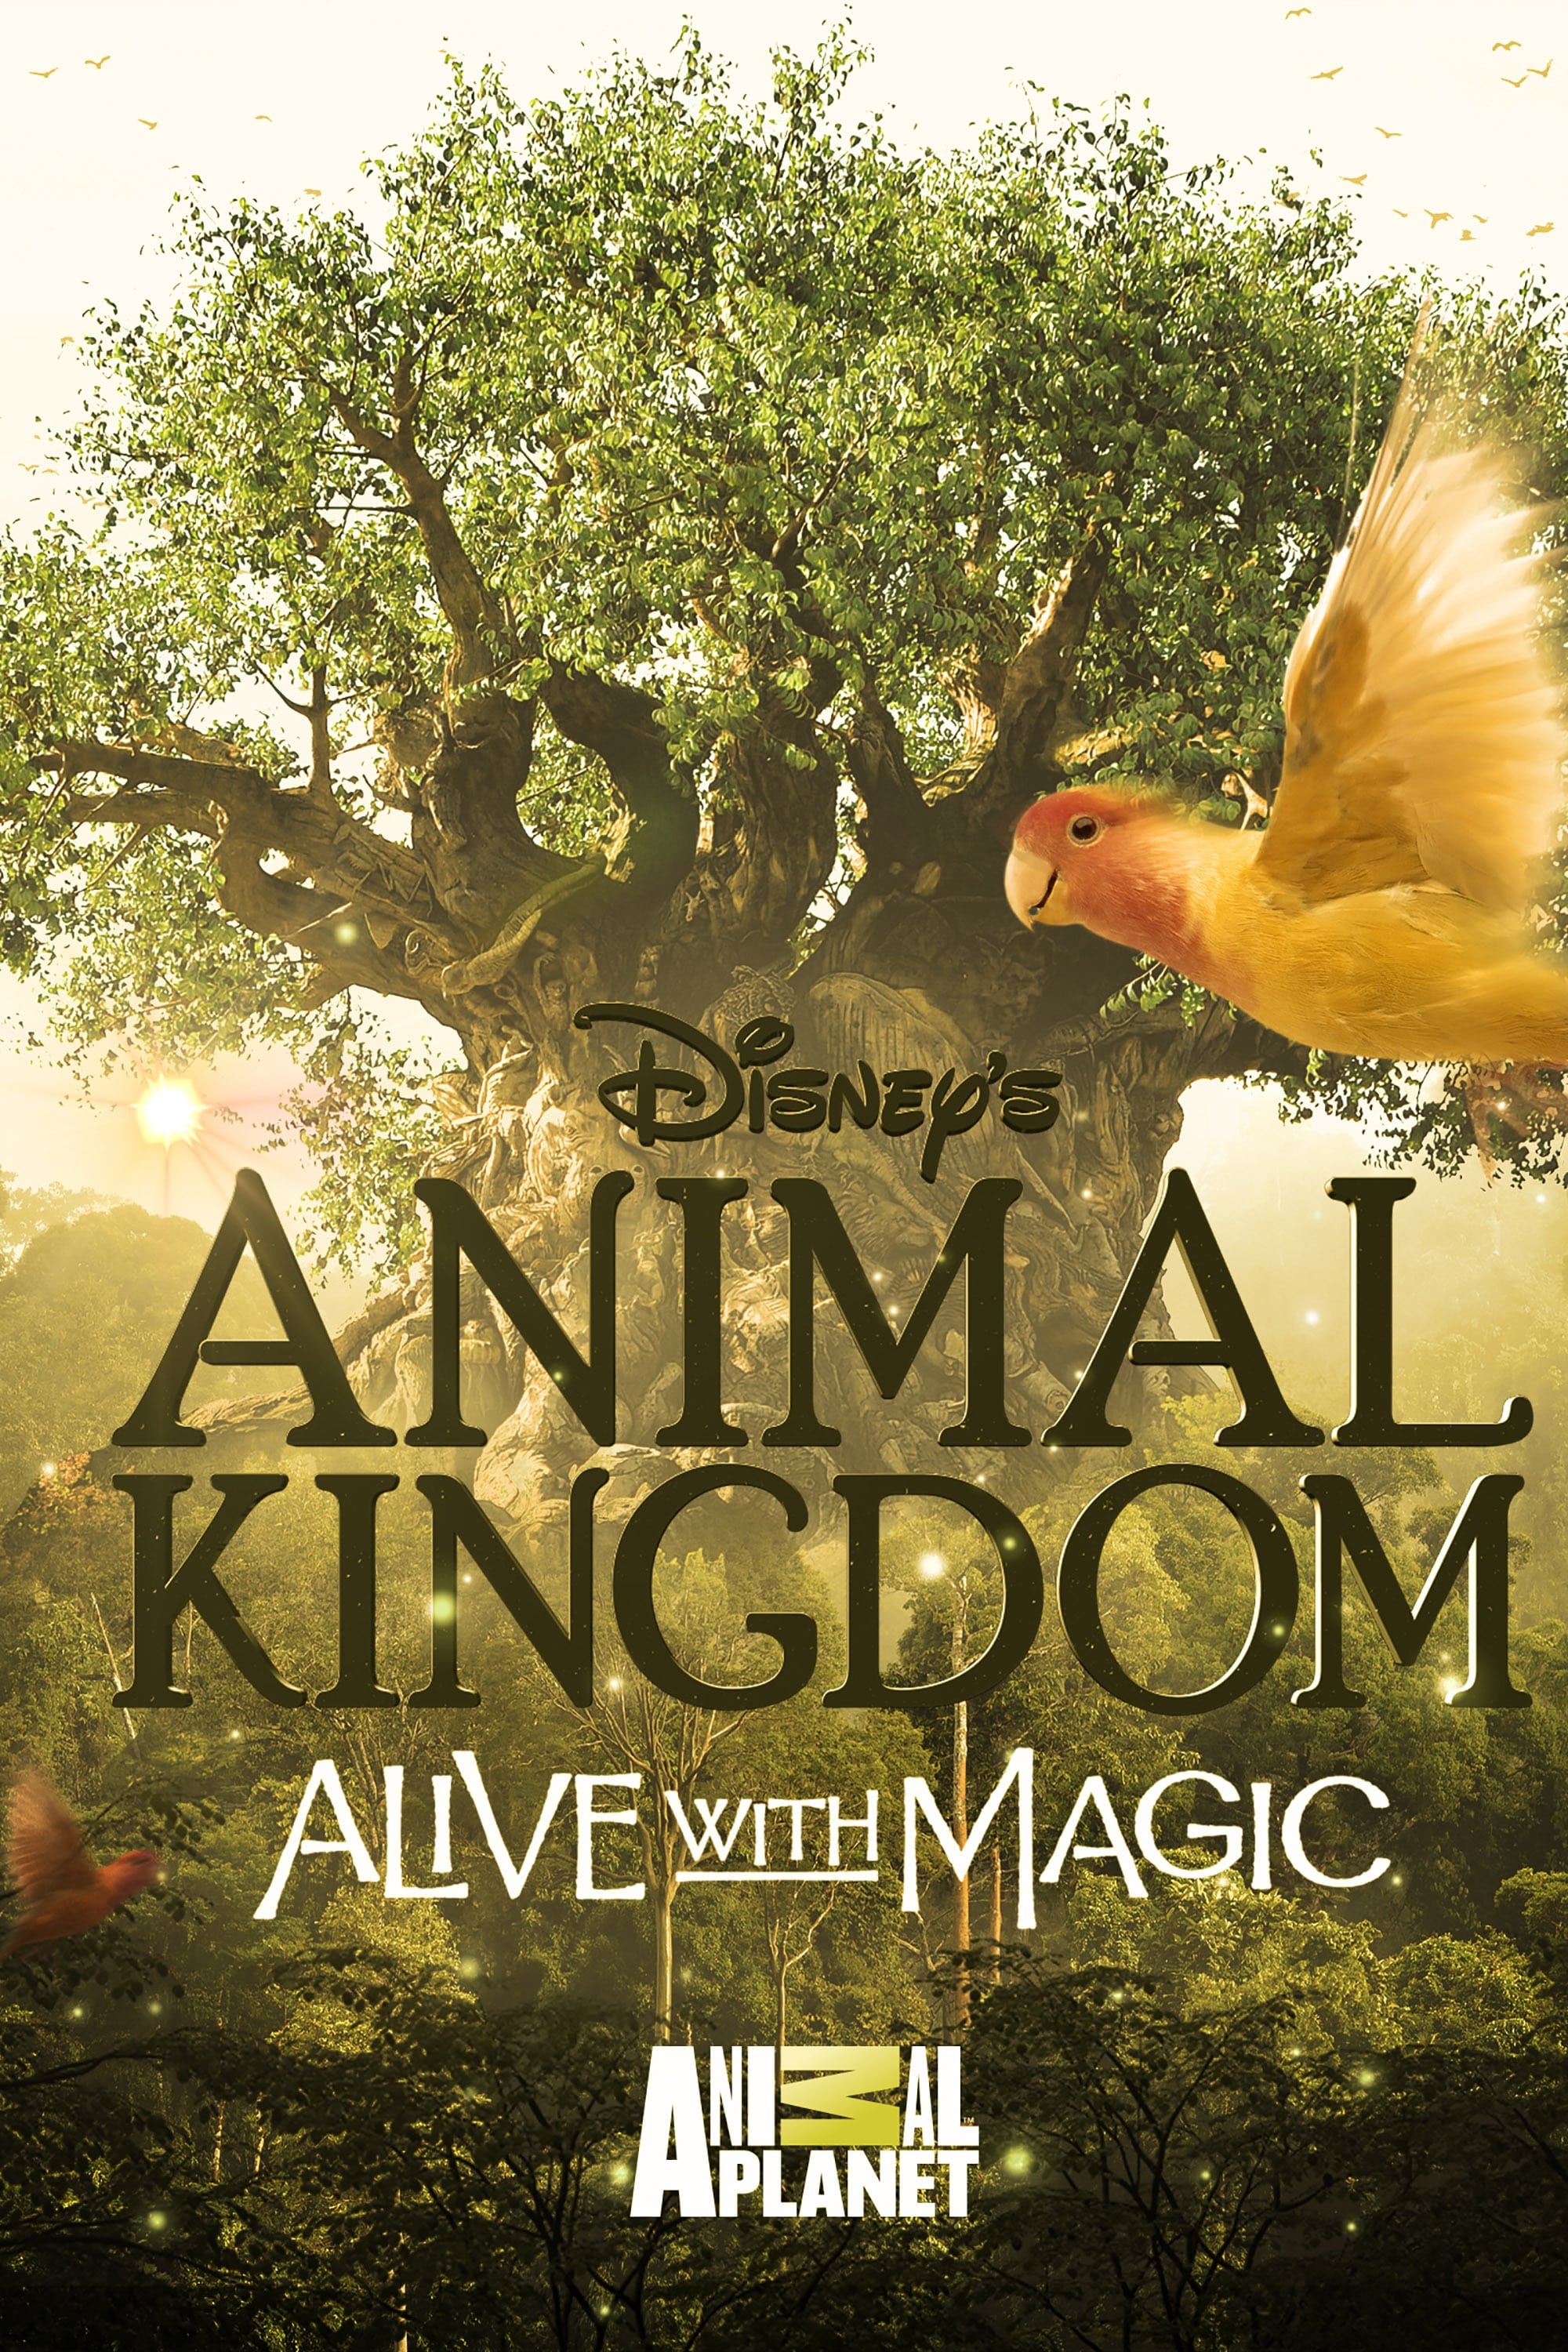 Disney's Animal Kingdom: Alive with Magic